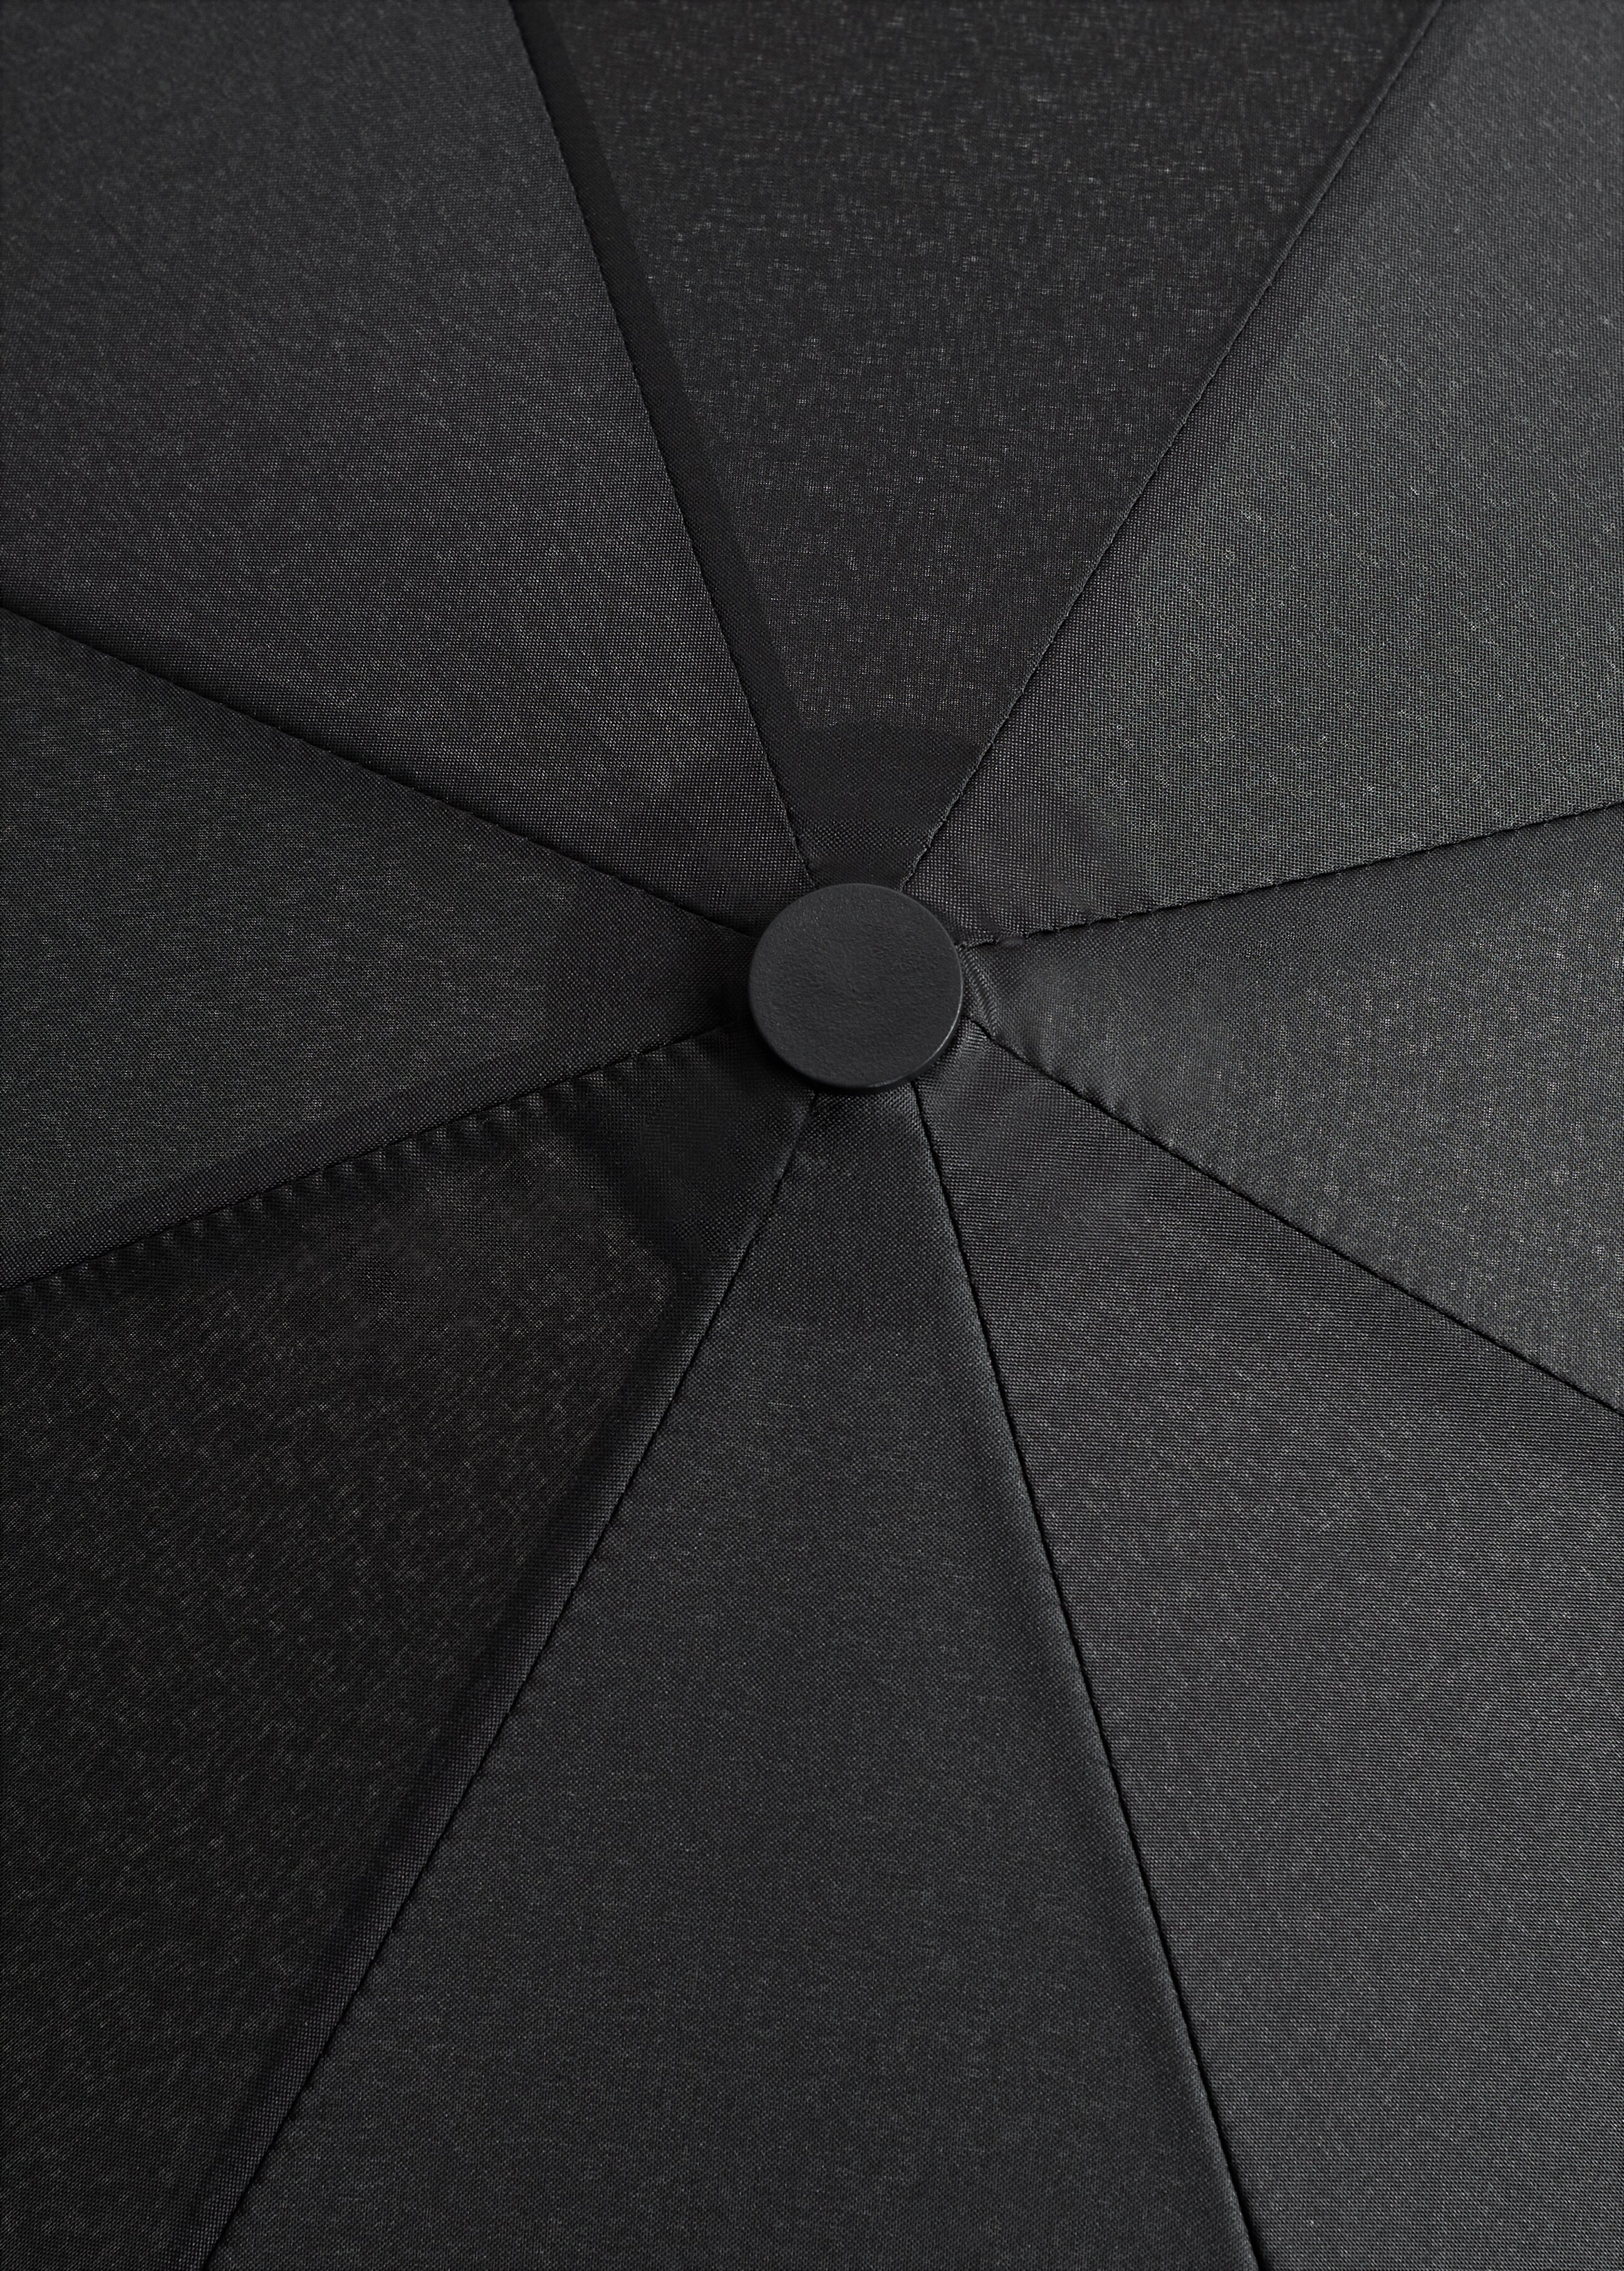 Plain folding umbrella - Details of the article 3